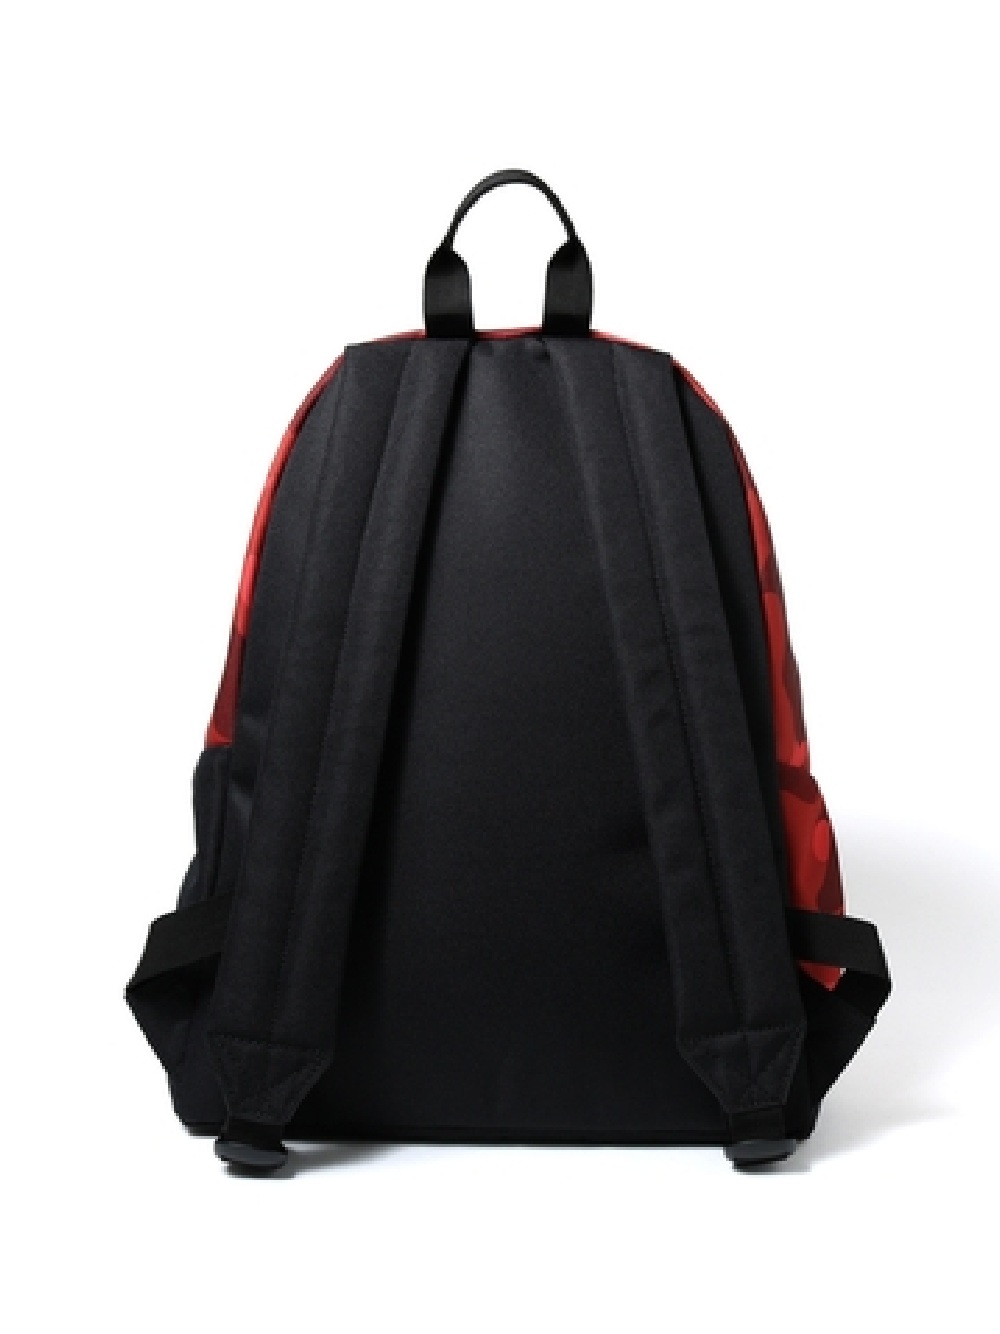 Buy BAPE Check Daypack 'Red' - 4I20 189 001 RED